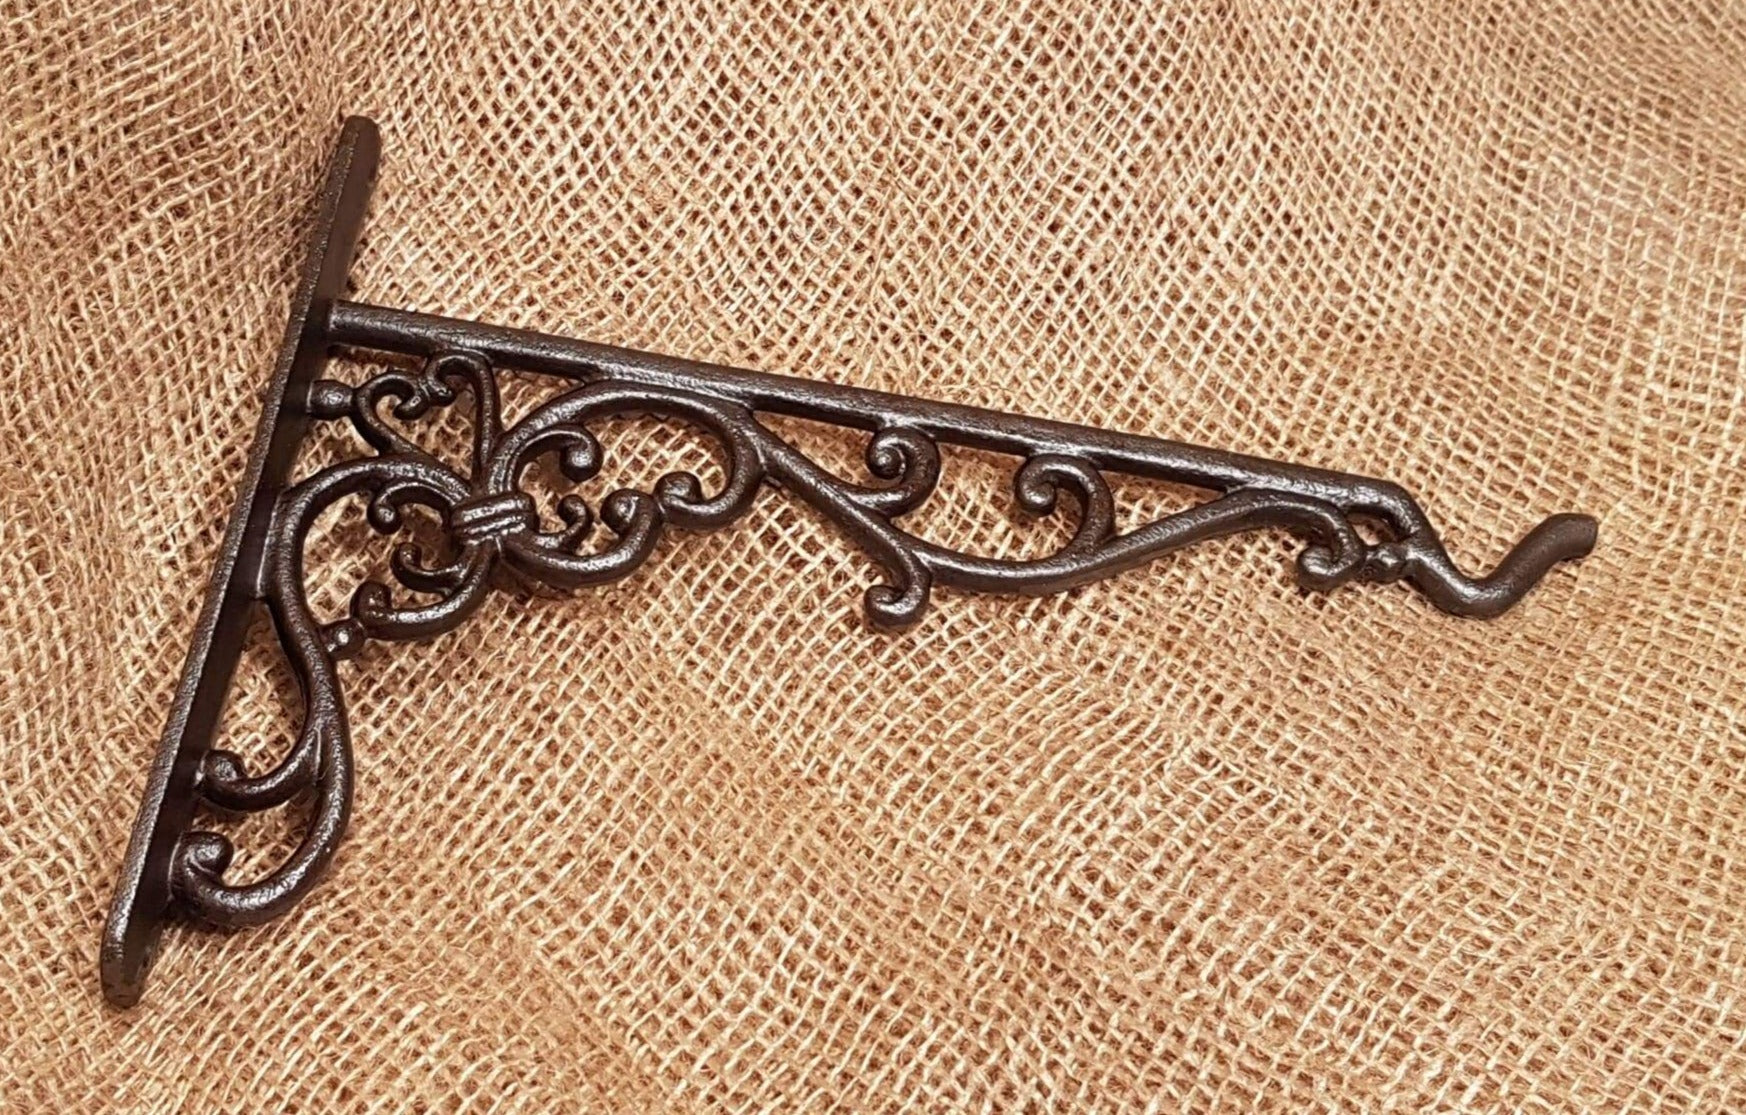 The Elverley Scroll Bracket with Hook End - Spearhead Collection - Misc. Brackets - Brackets, Exterior Decor, Hanging basket bracket, Hardware, Hooks, Support Brackets